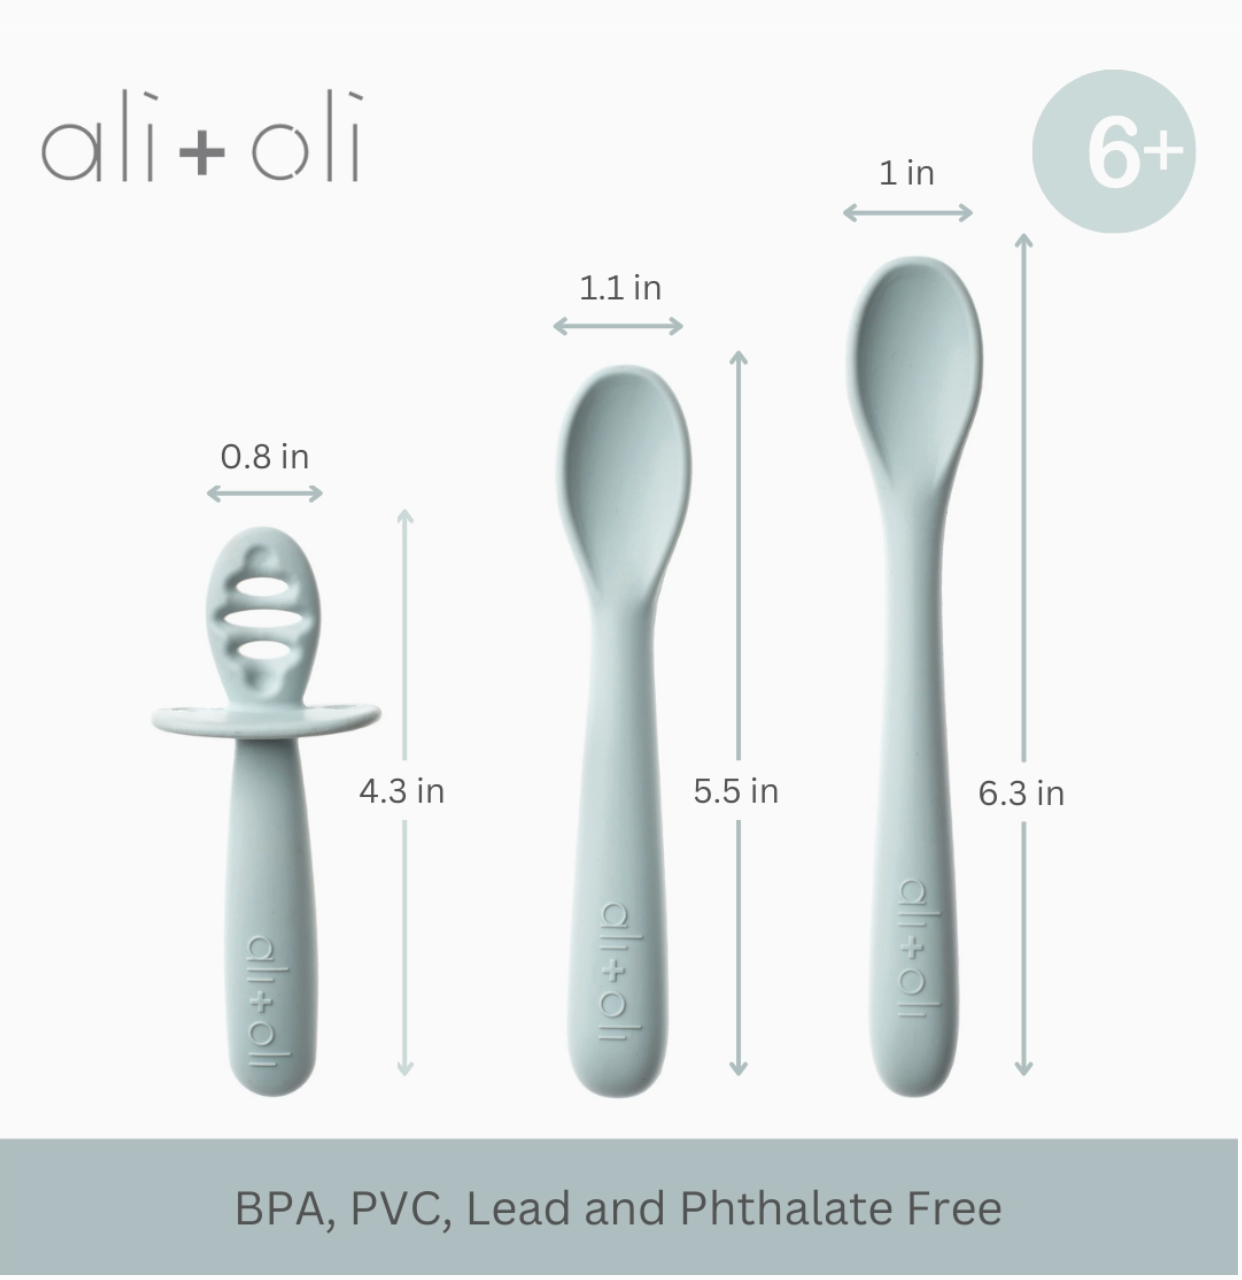 Ali+Oli (3-pc) Multi Stage Spoon Set For Baby (Blue) 6m+